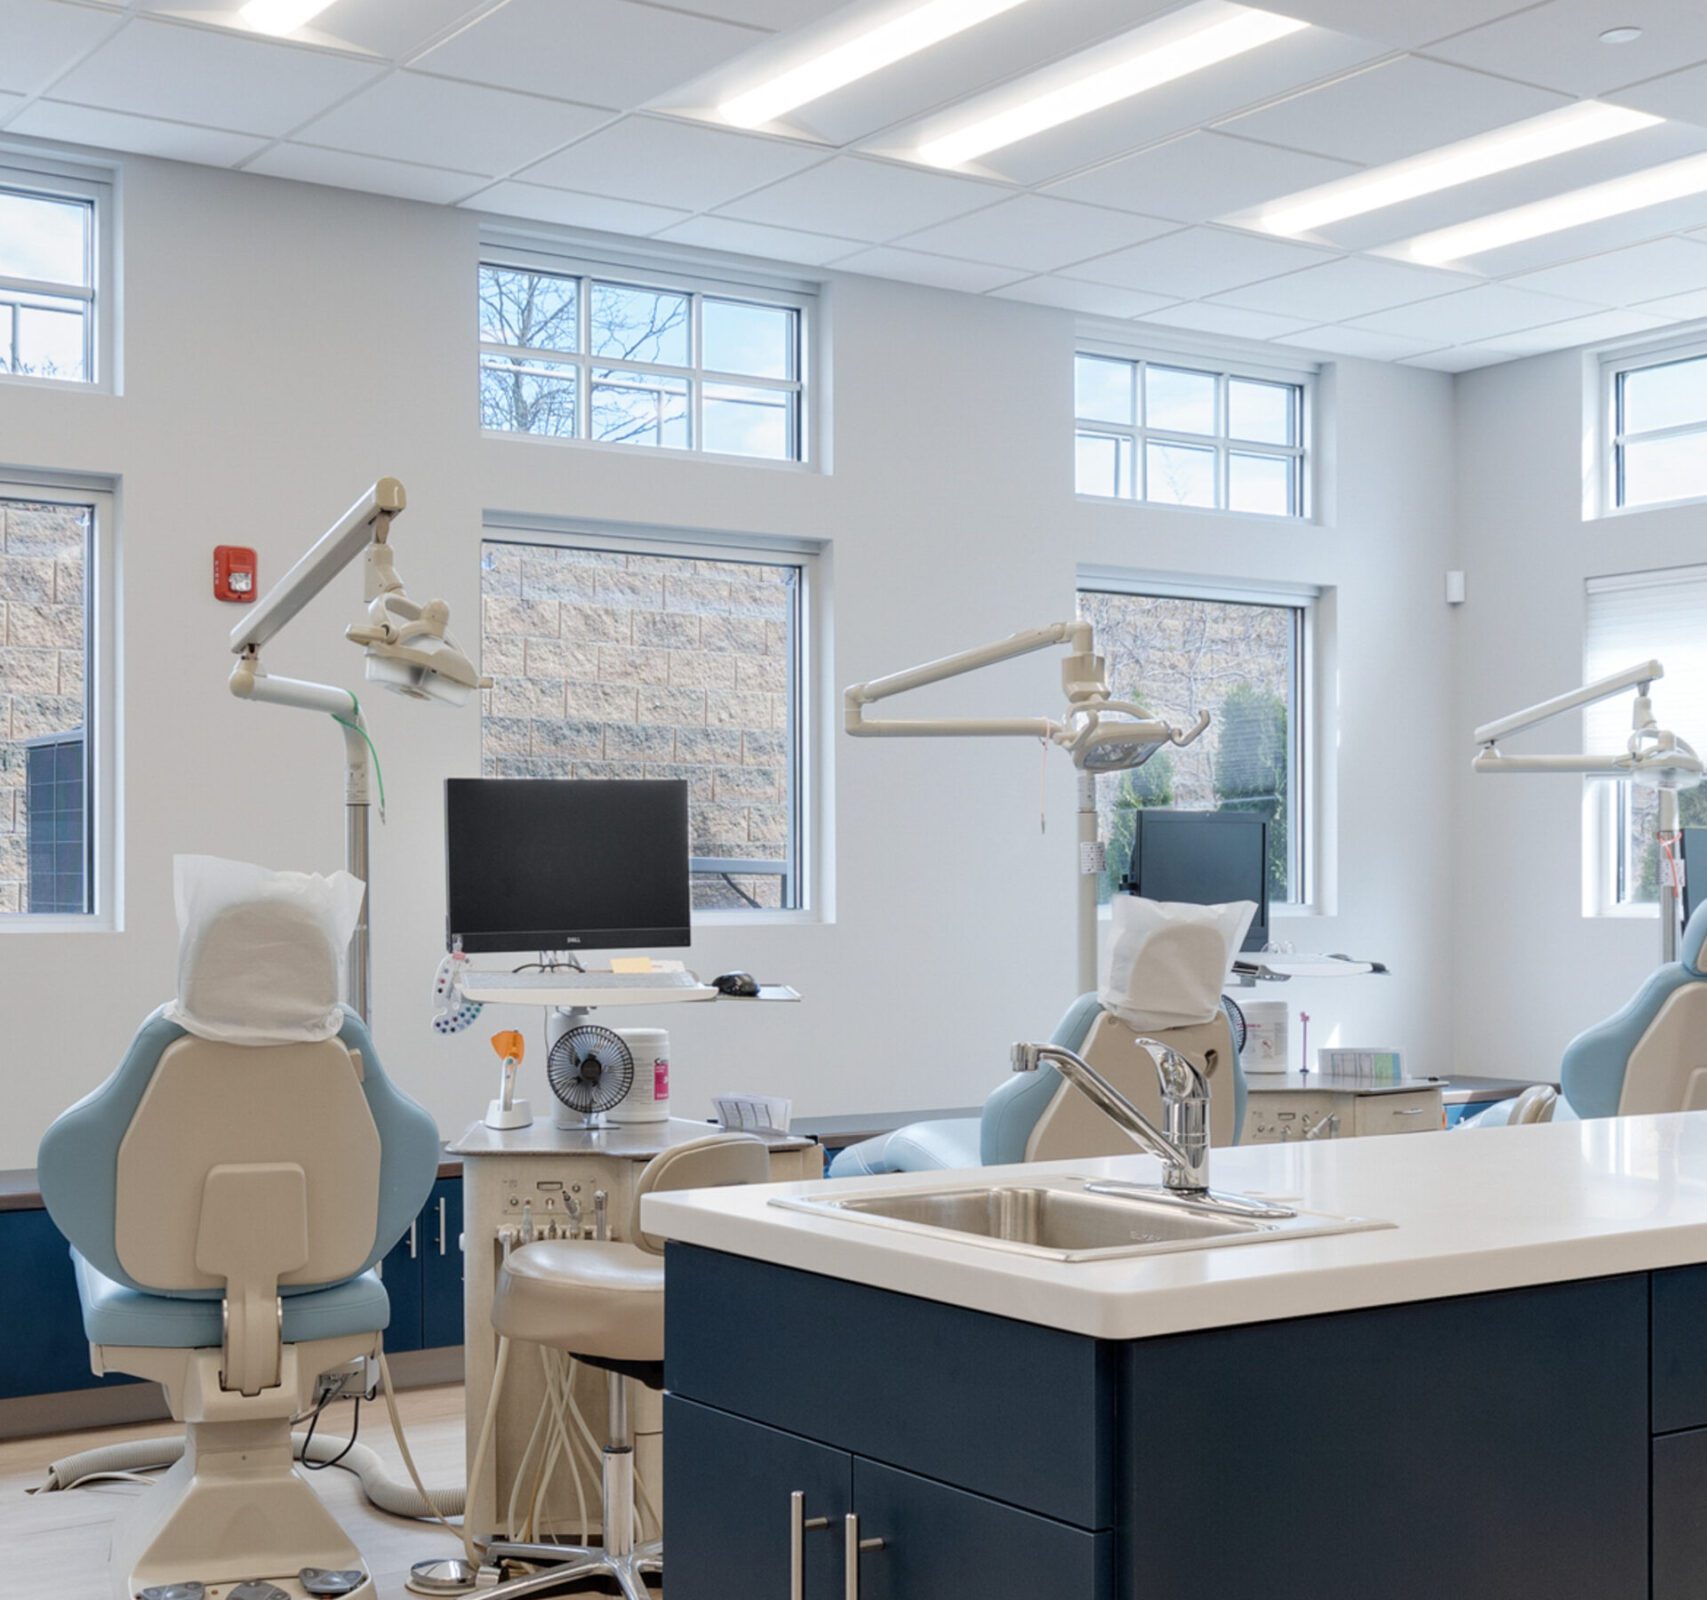 Saylor Murphy and Orthodontics exam chairs.